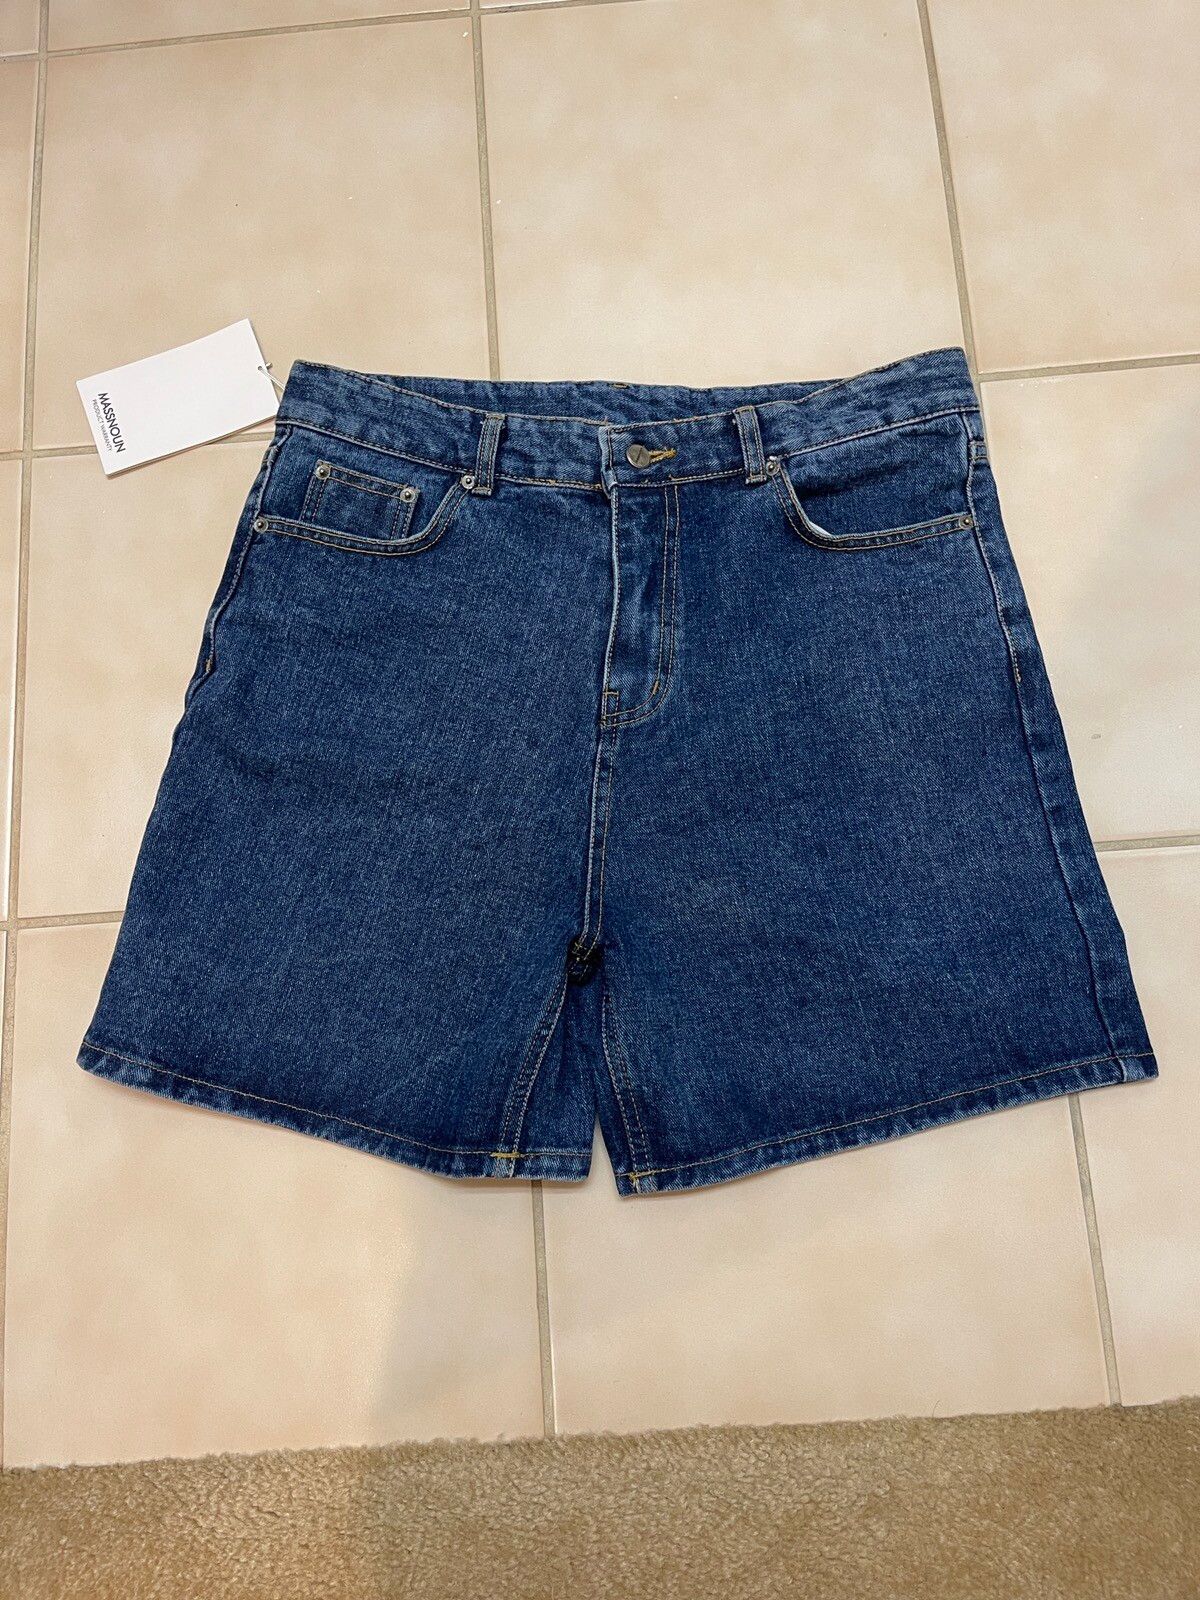 Custom Massnoun blue denim jeans shorts Jorts 34 | Grailed